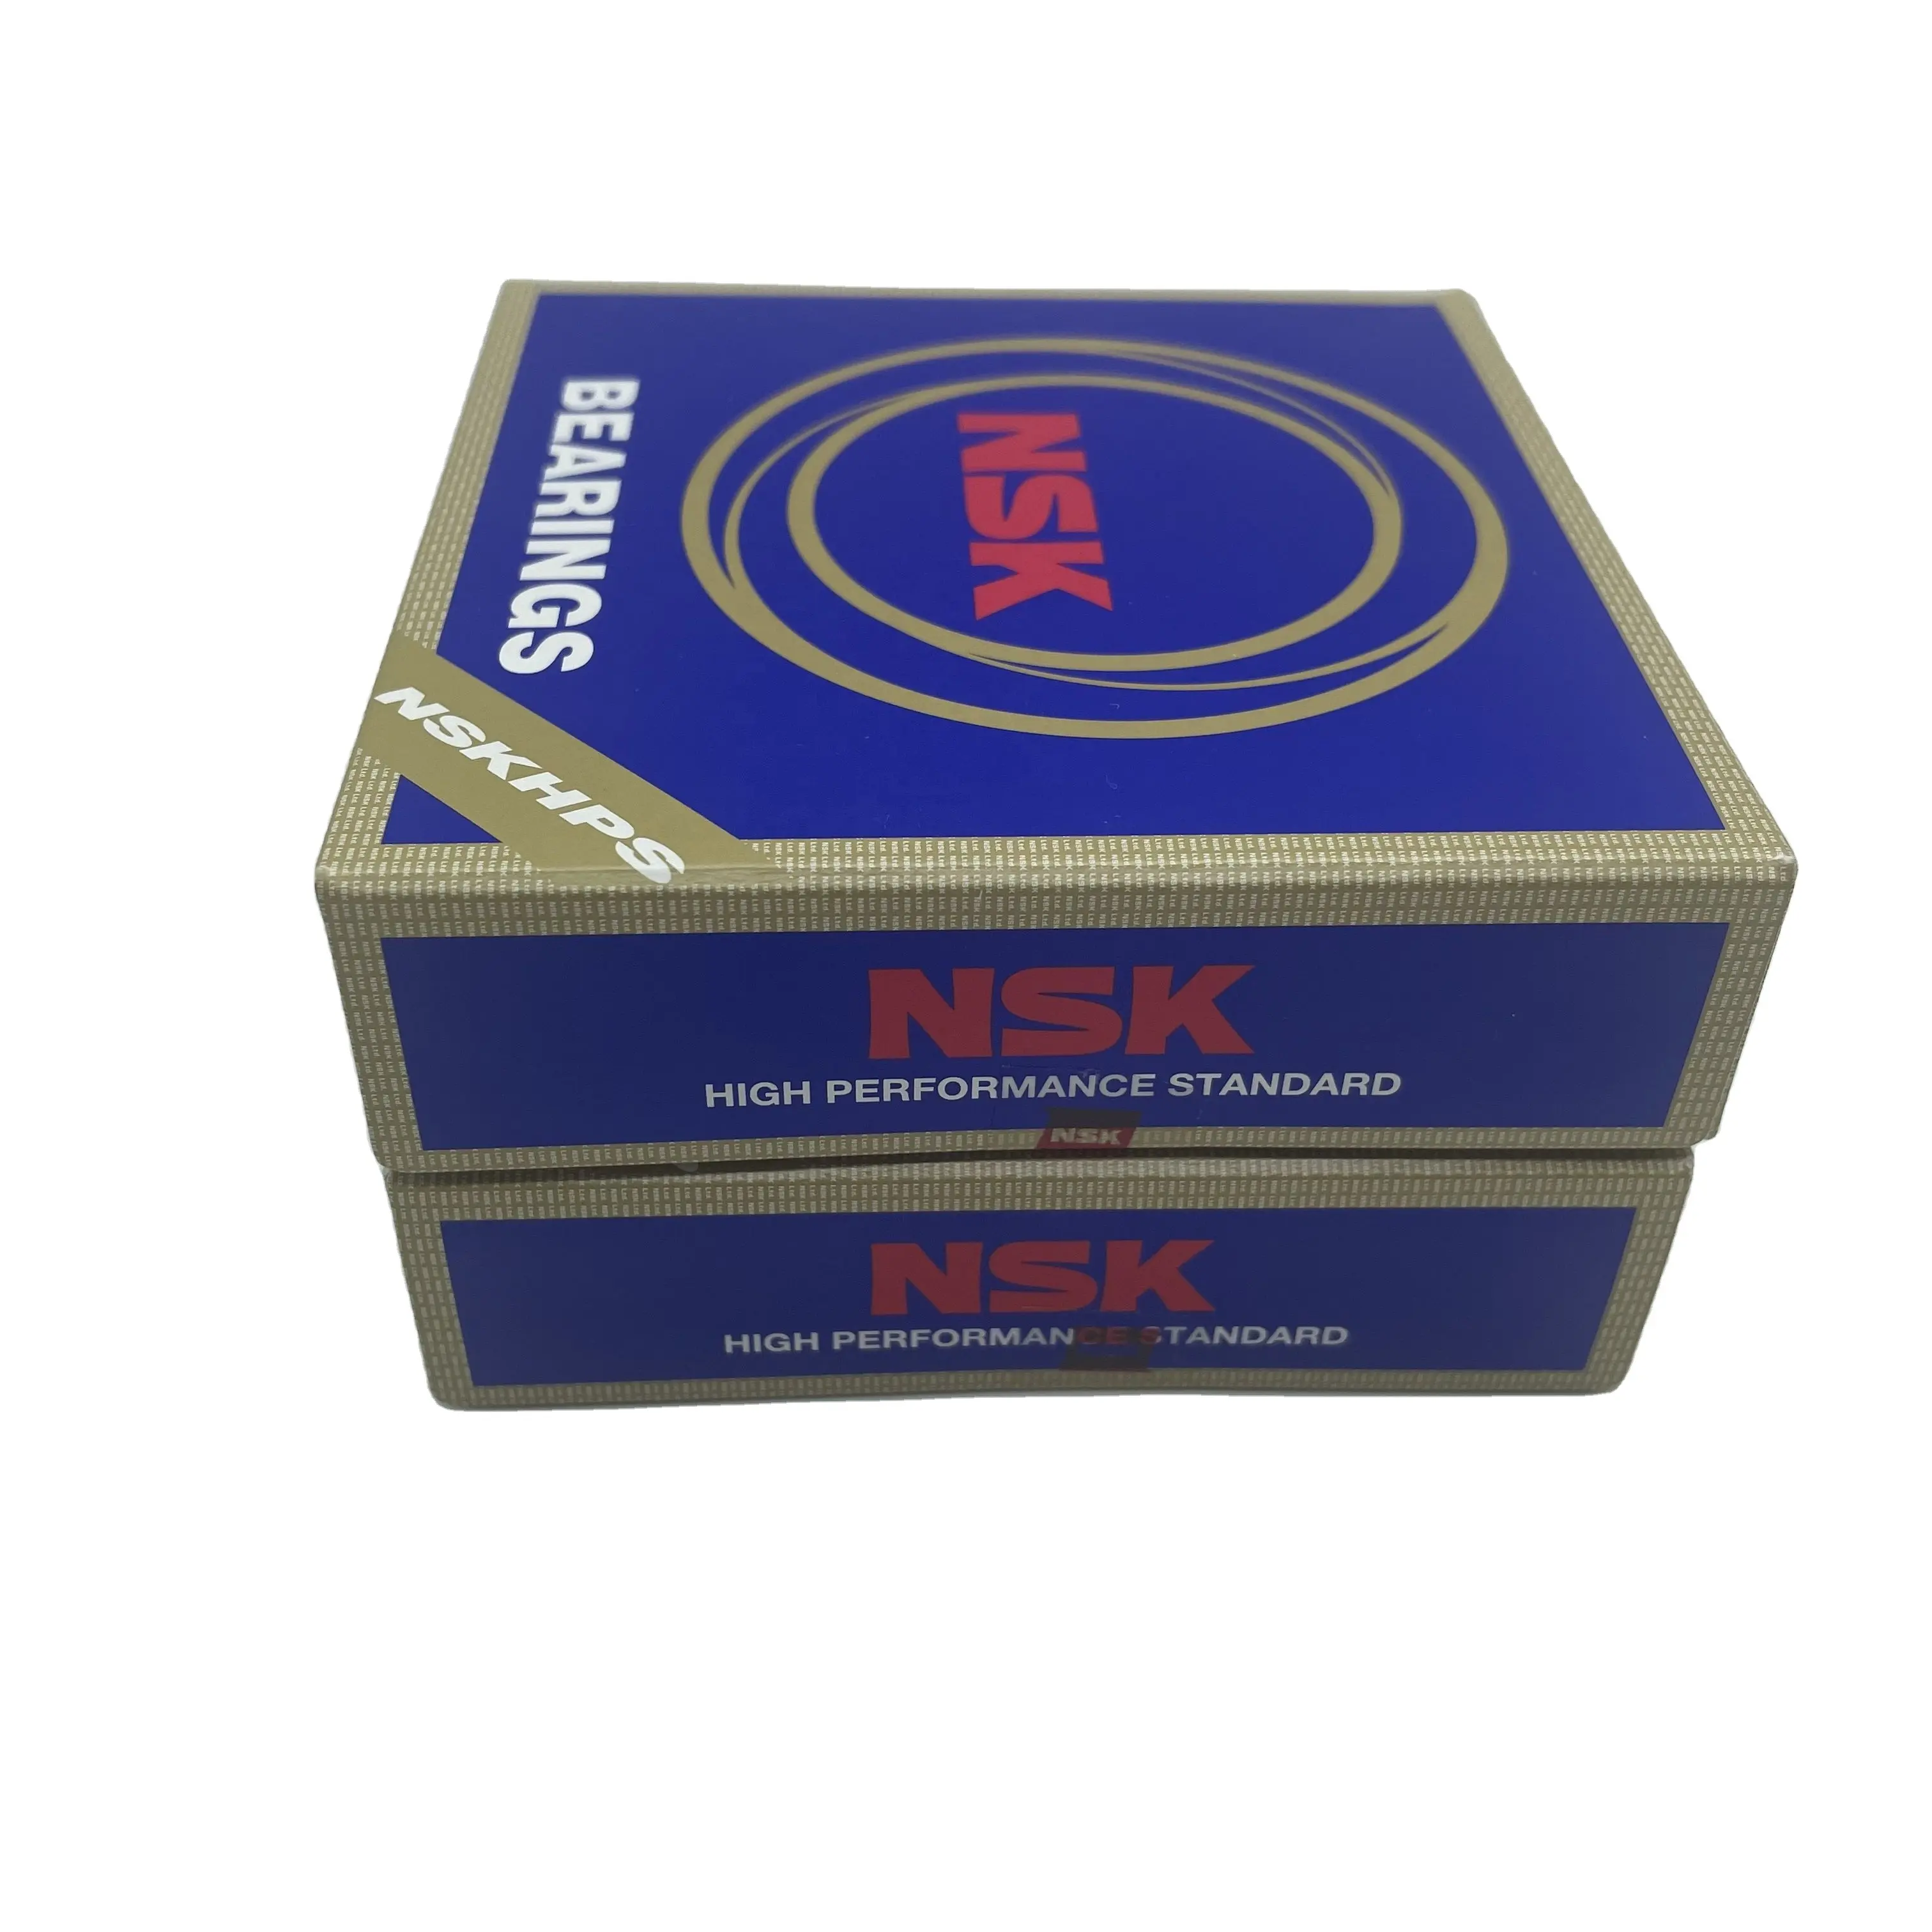 High Quality Bearings Manufactures High Speed NS K Deep Groove Ball Bearing 6009 Bearing 6009DDUCM